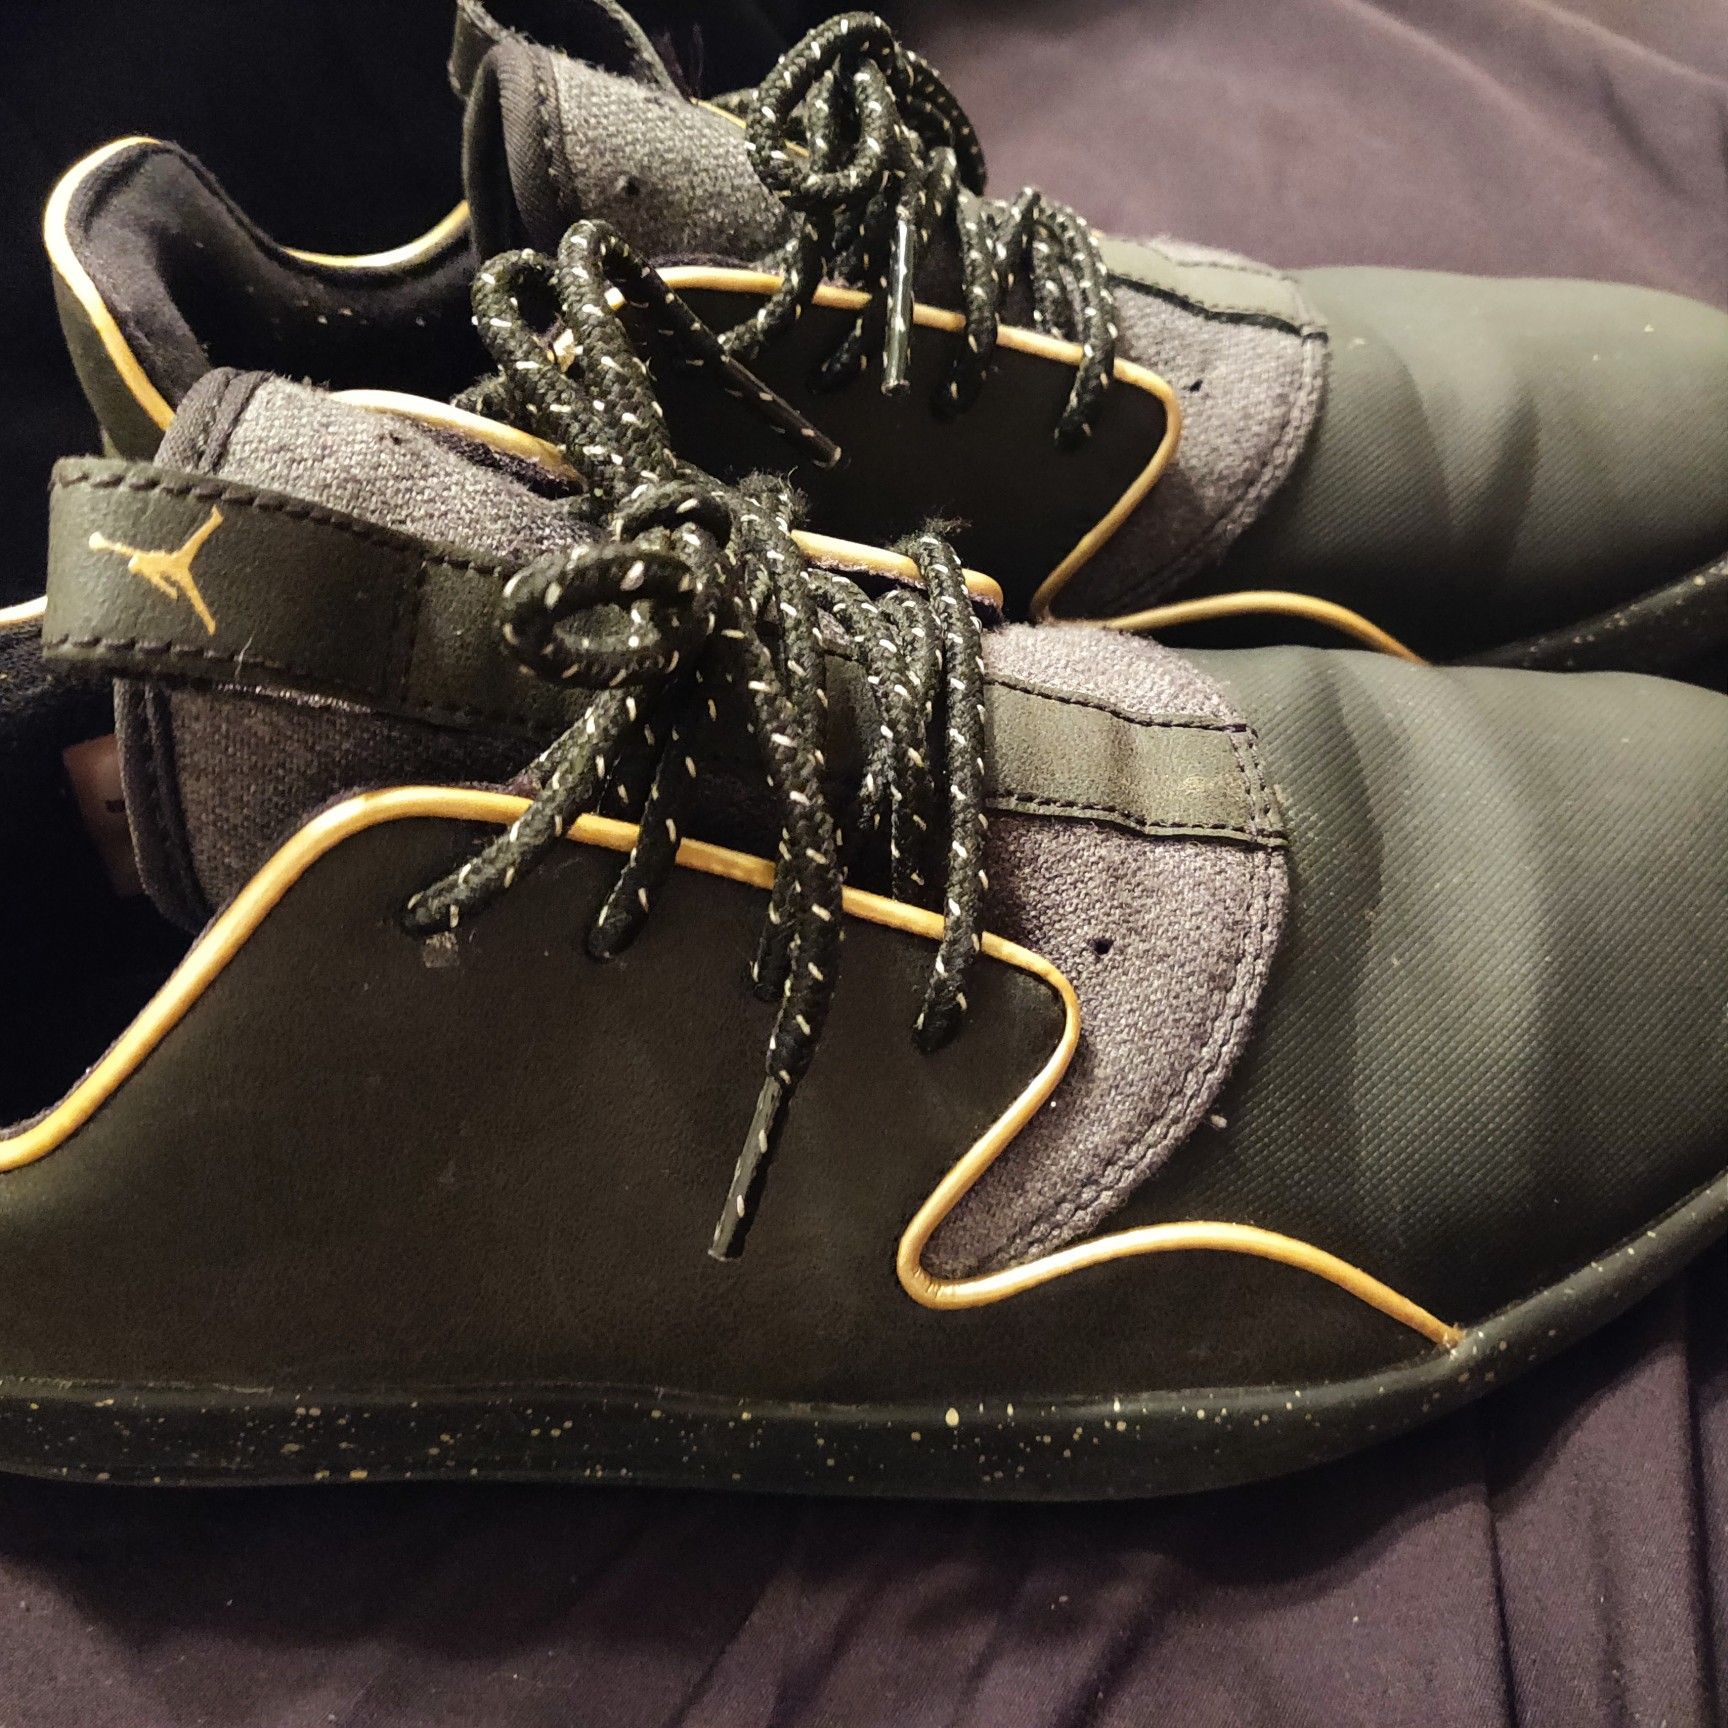 Jordan Black & Gold shoe